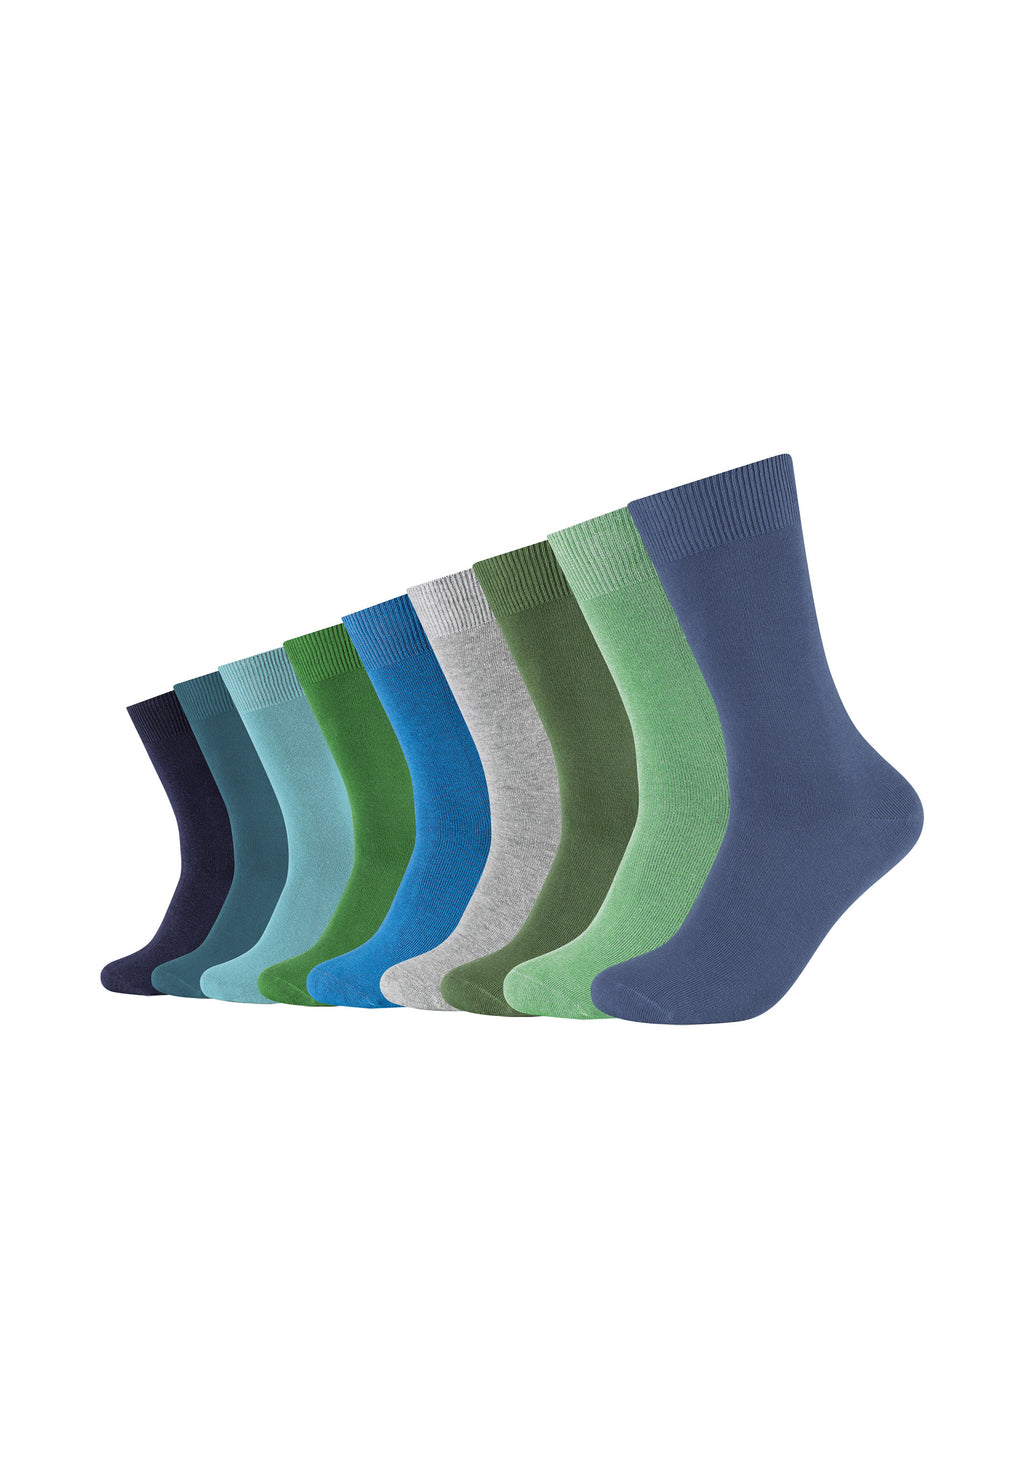 Socken 9er mit ONSKINERY comfort – Bio-Baumwolle Pack